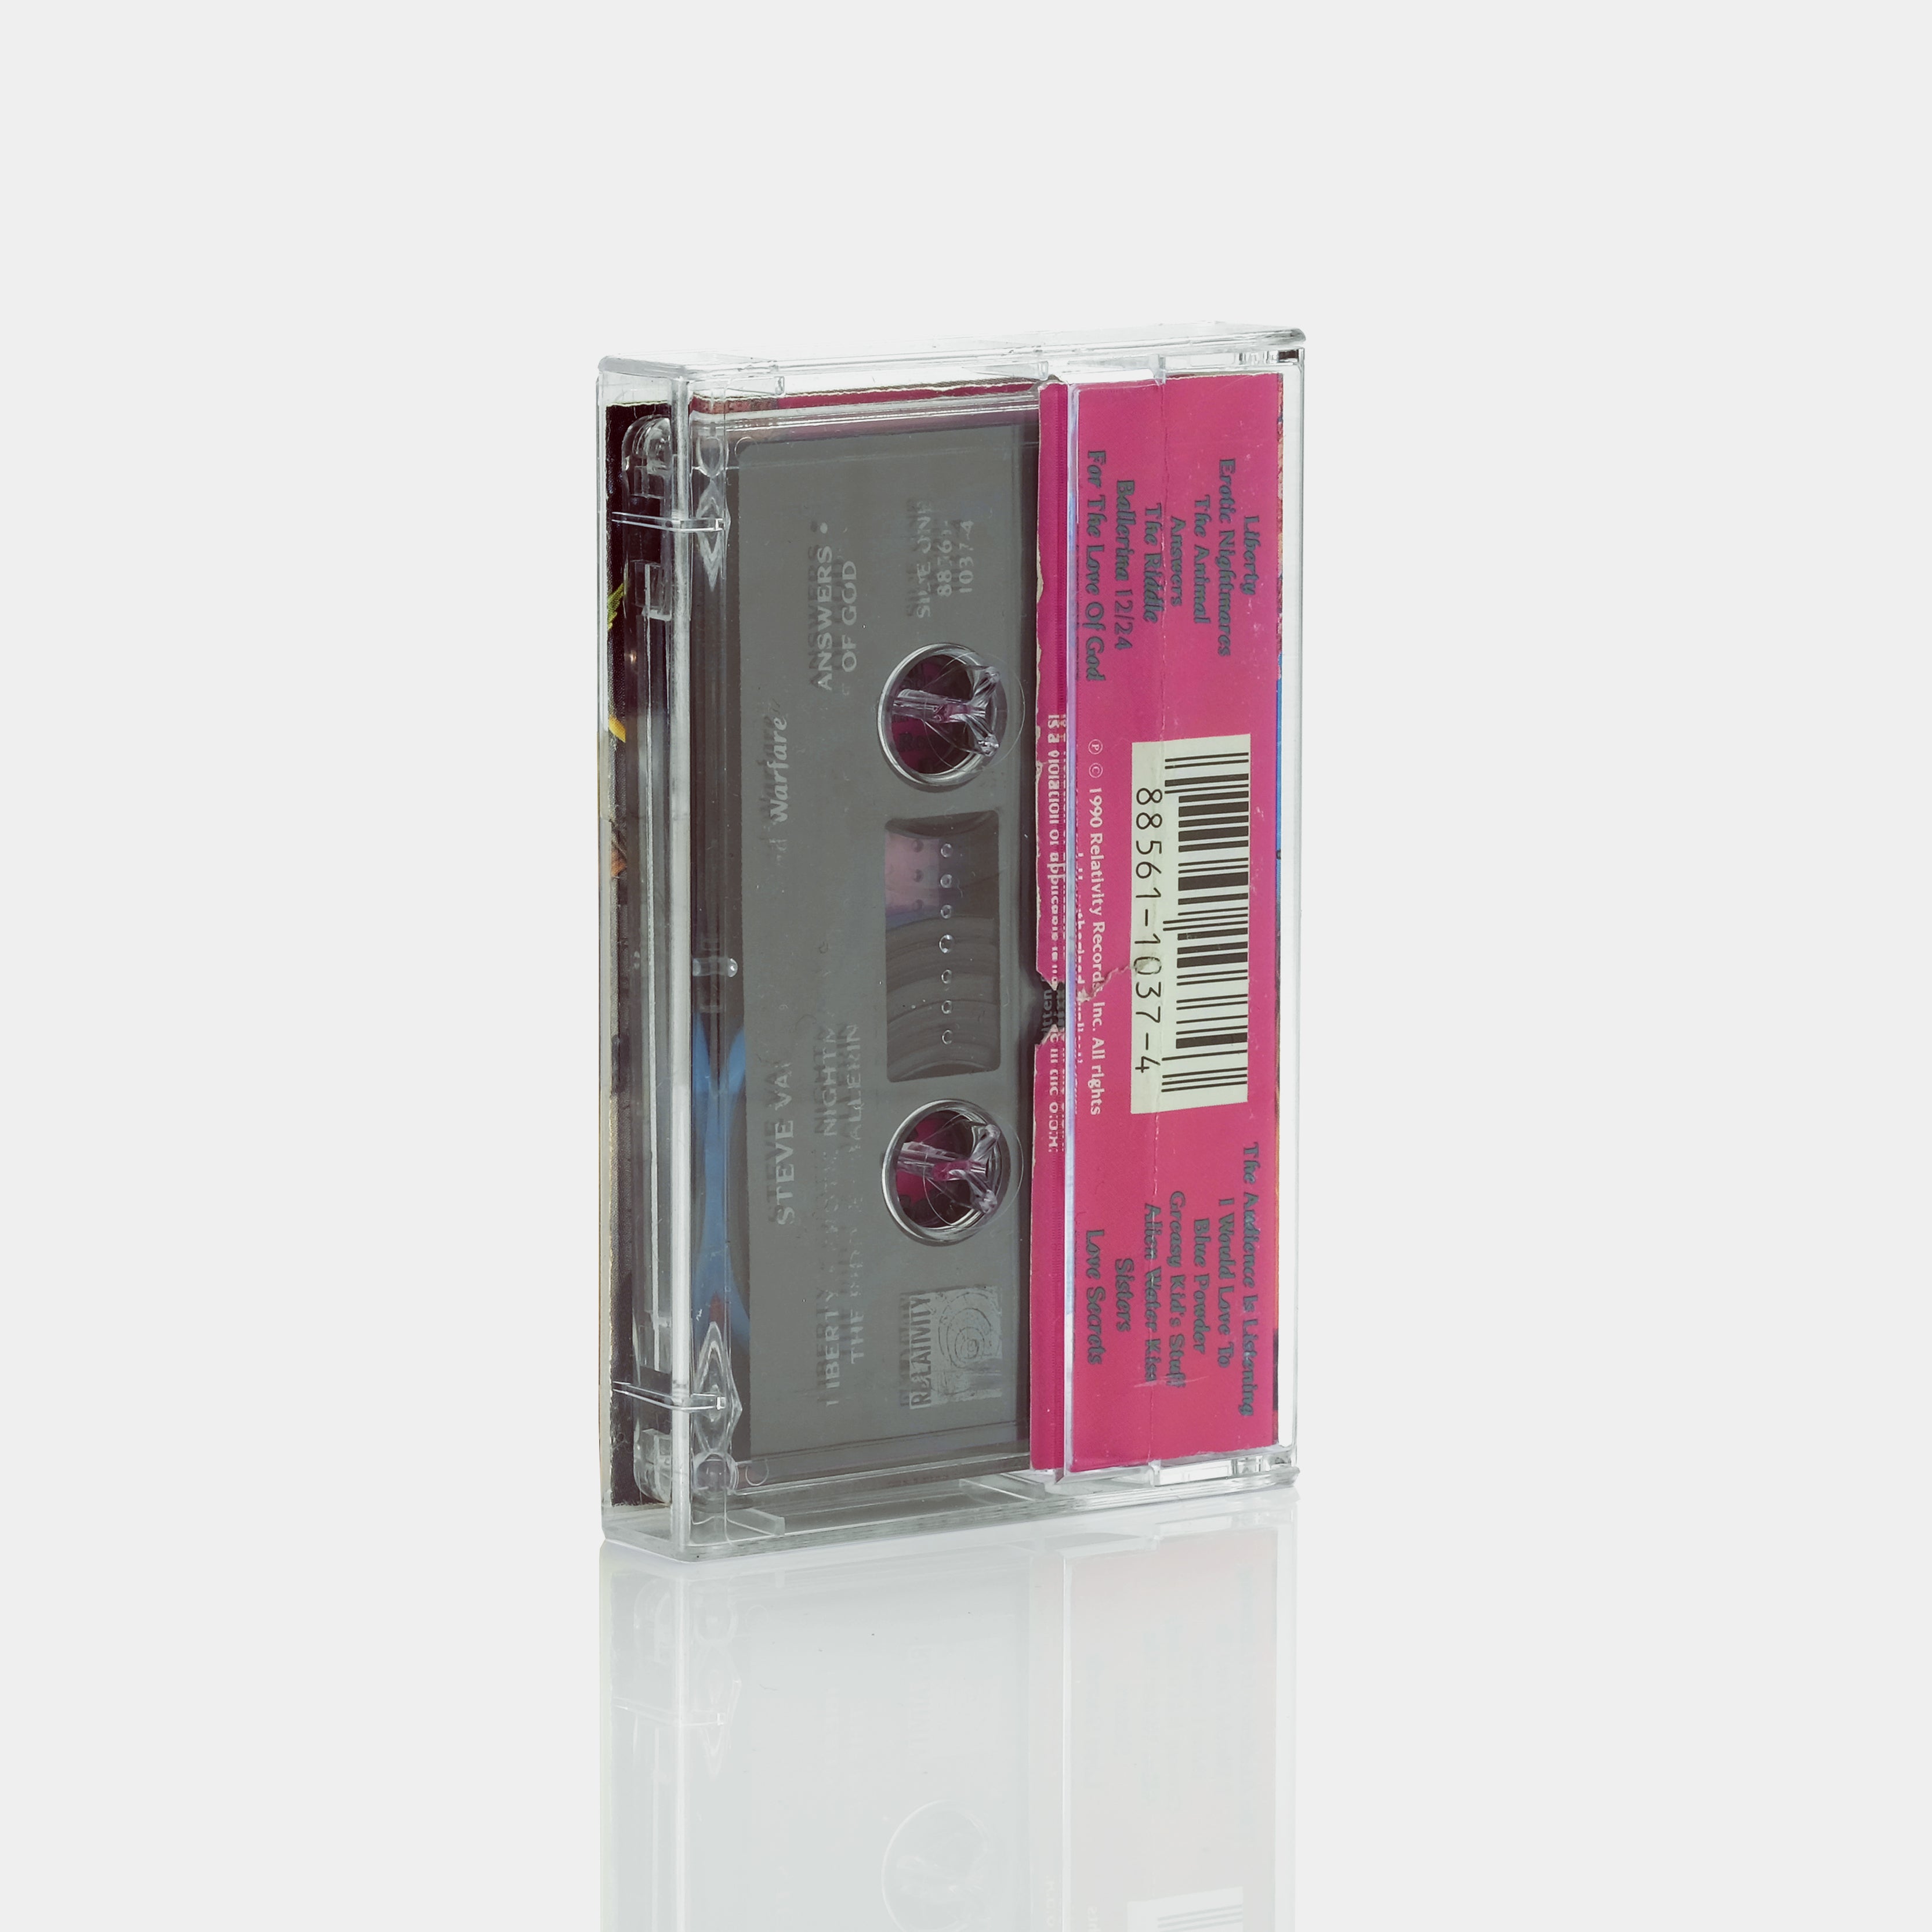 Steve Vai - Passion And Warfare Cassette Tape